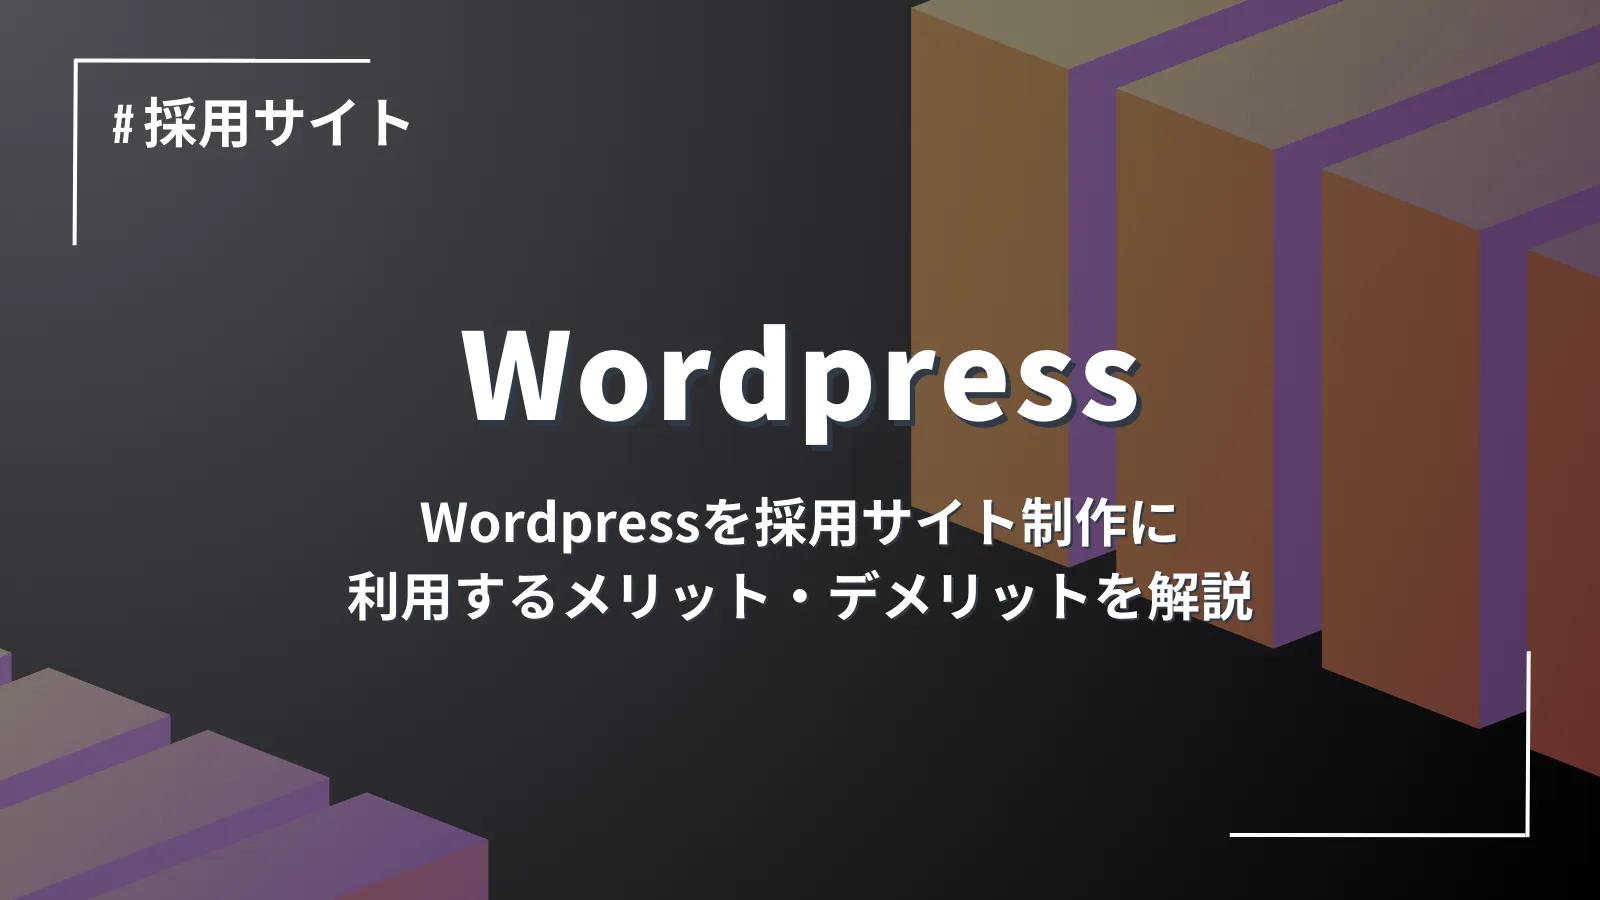 Wordpressを採用サイト制作に利用するメリット・デメリットを解説